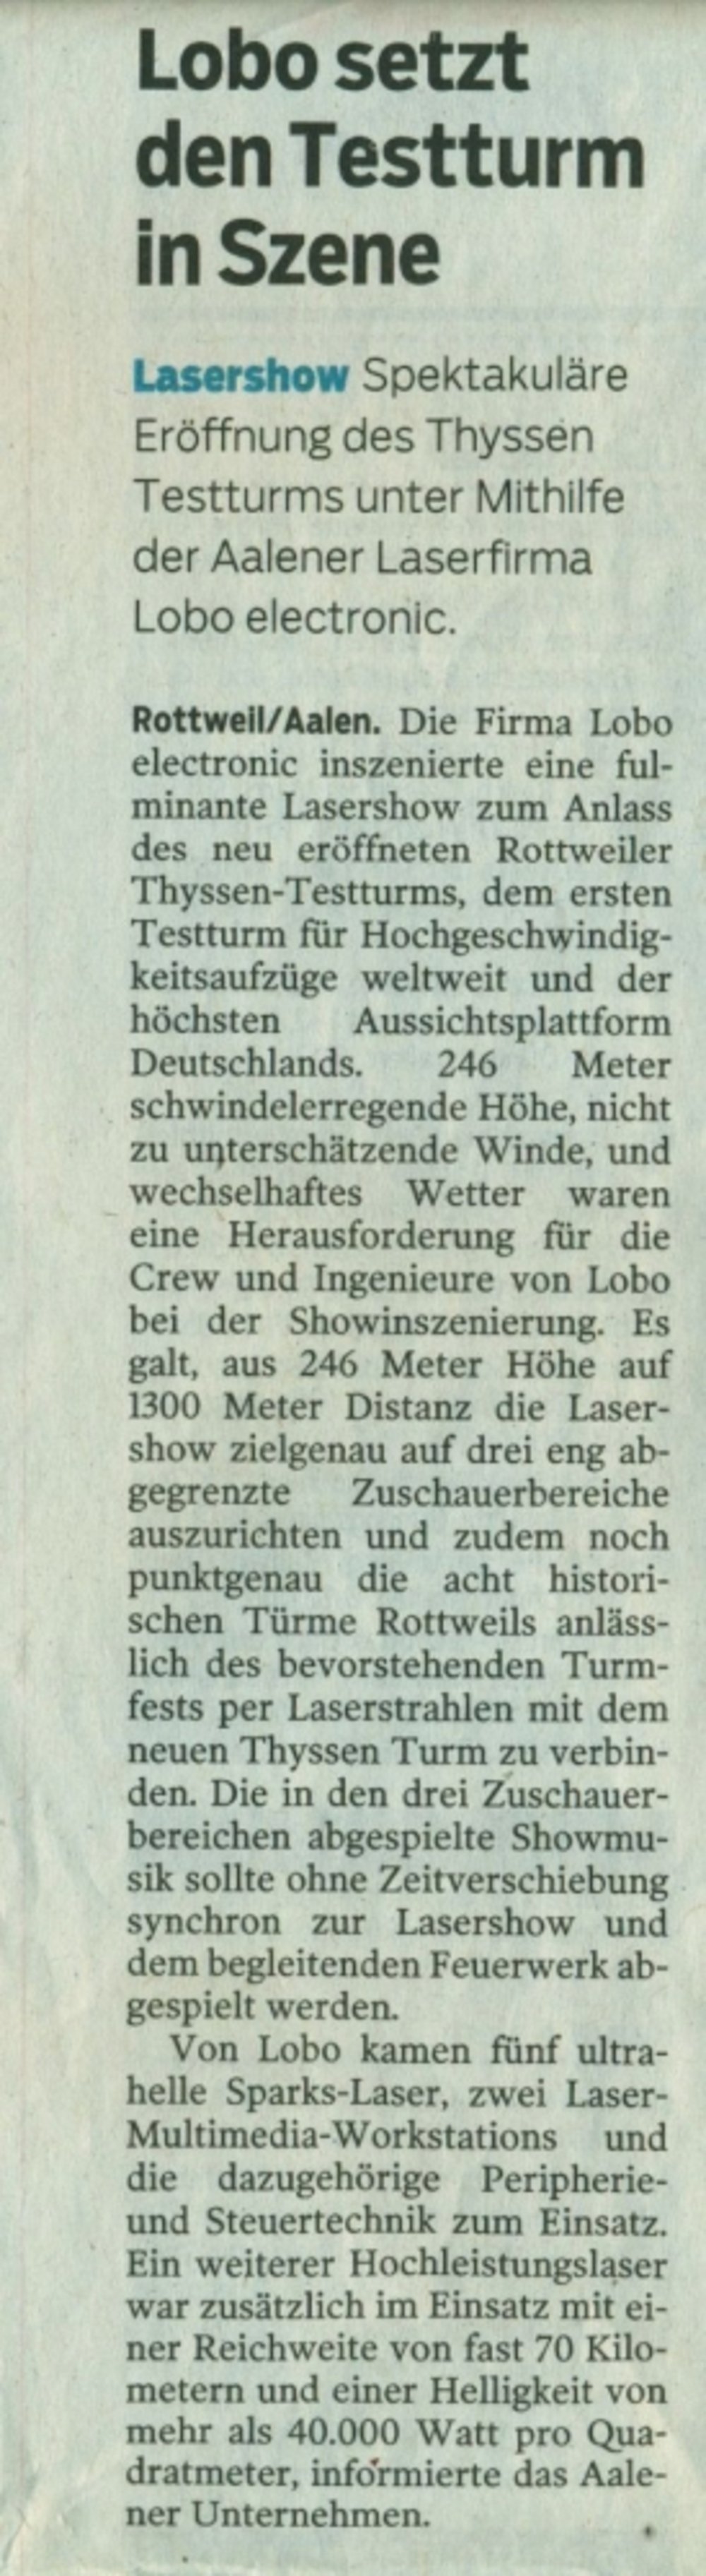 Schwaebische Post 25 Oktober 2017 S31 setzt den Testturm in Szene